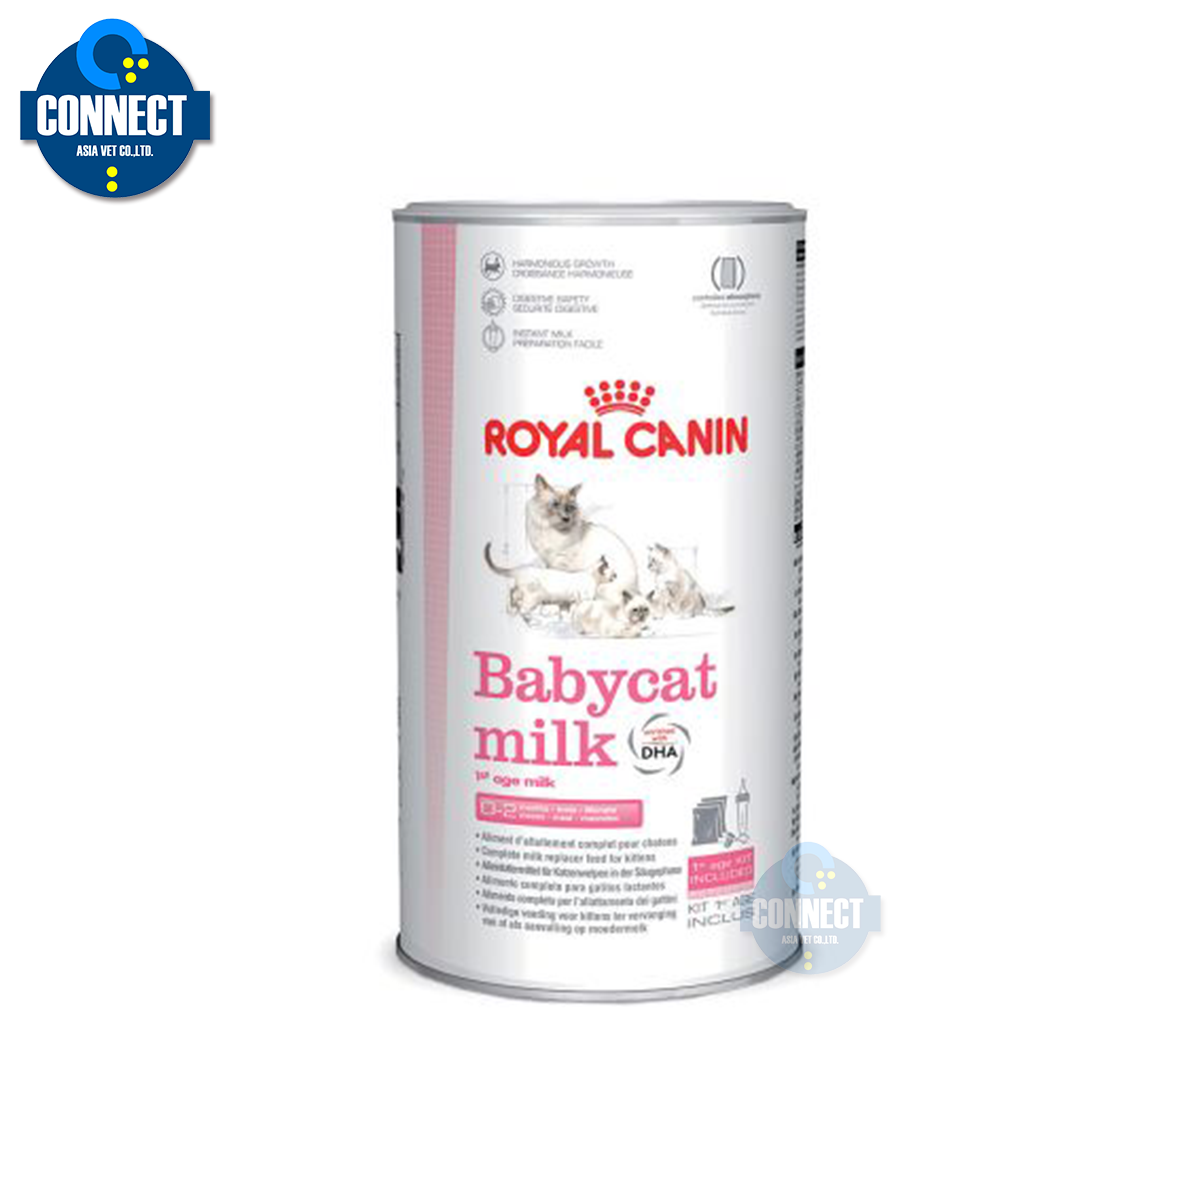 Royal Canin Babycat milk ขนาด 300 กรัม.